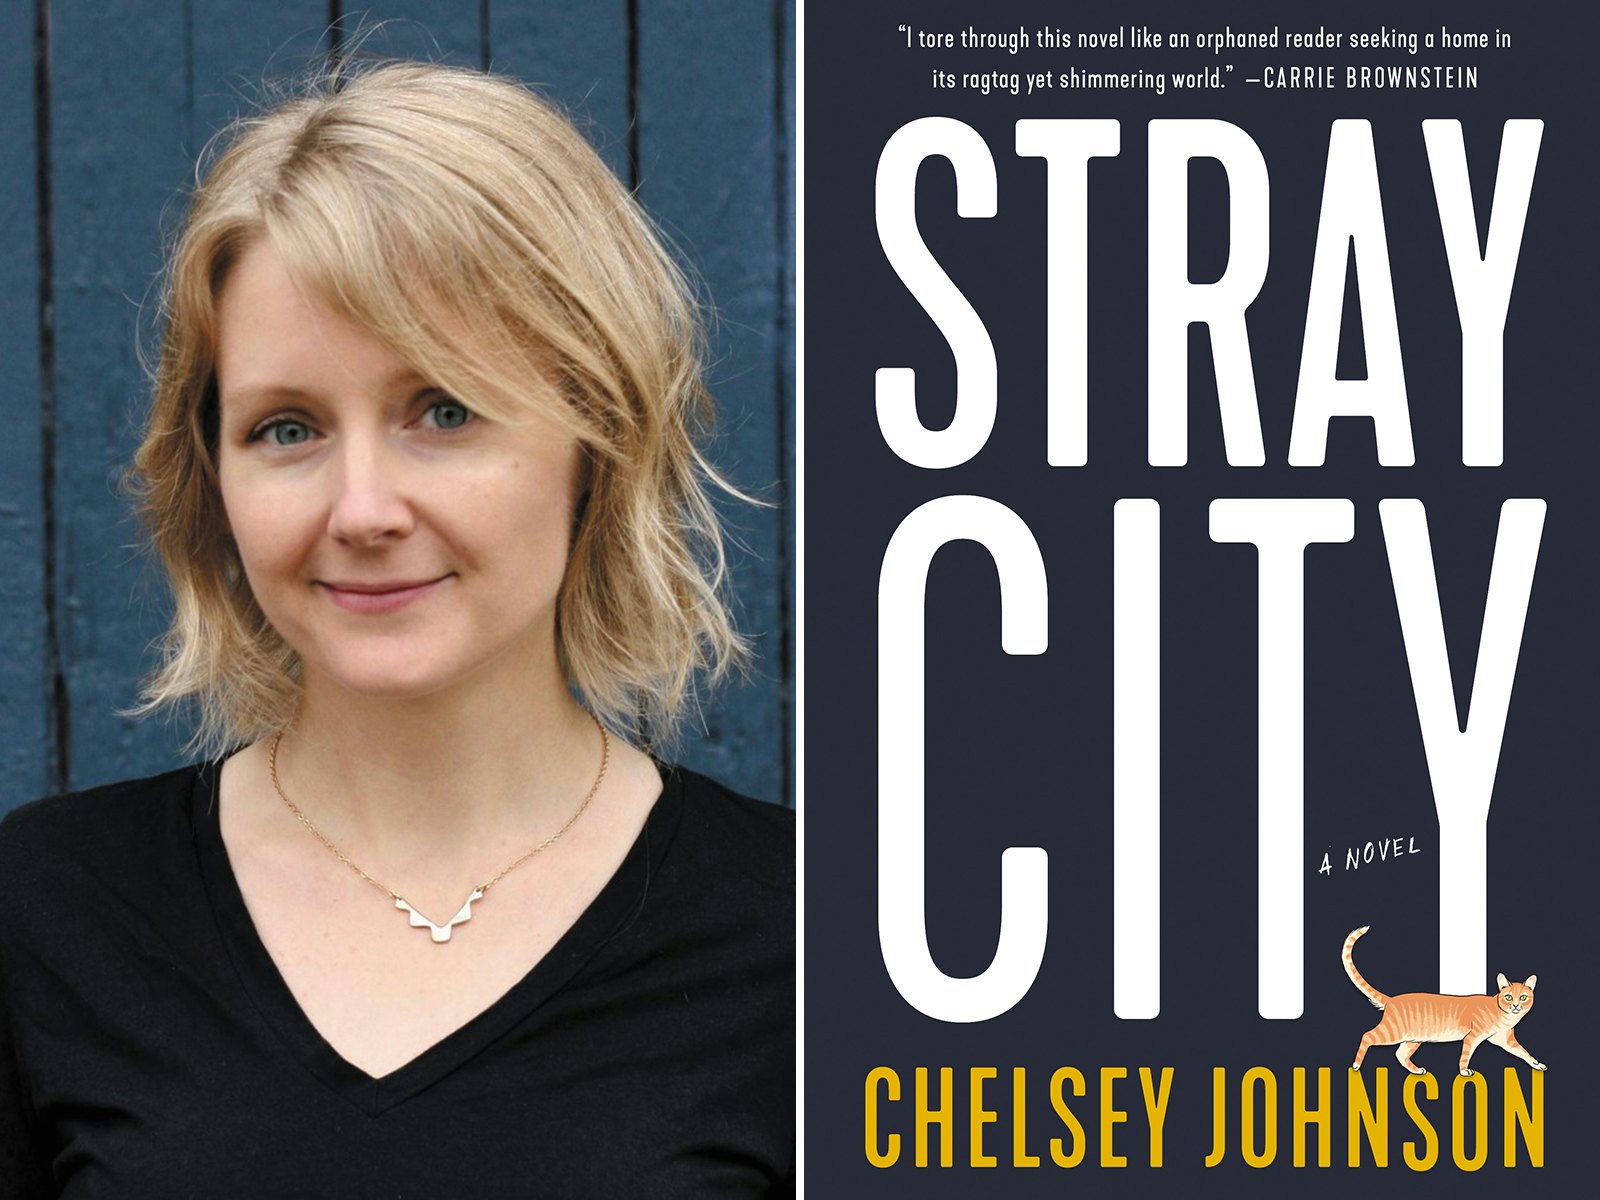 stray city by chelsey johnson